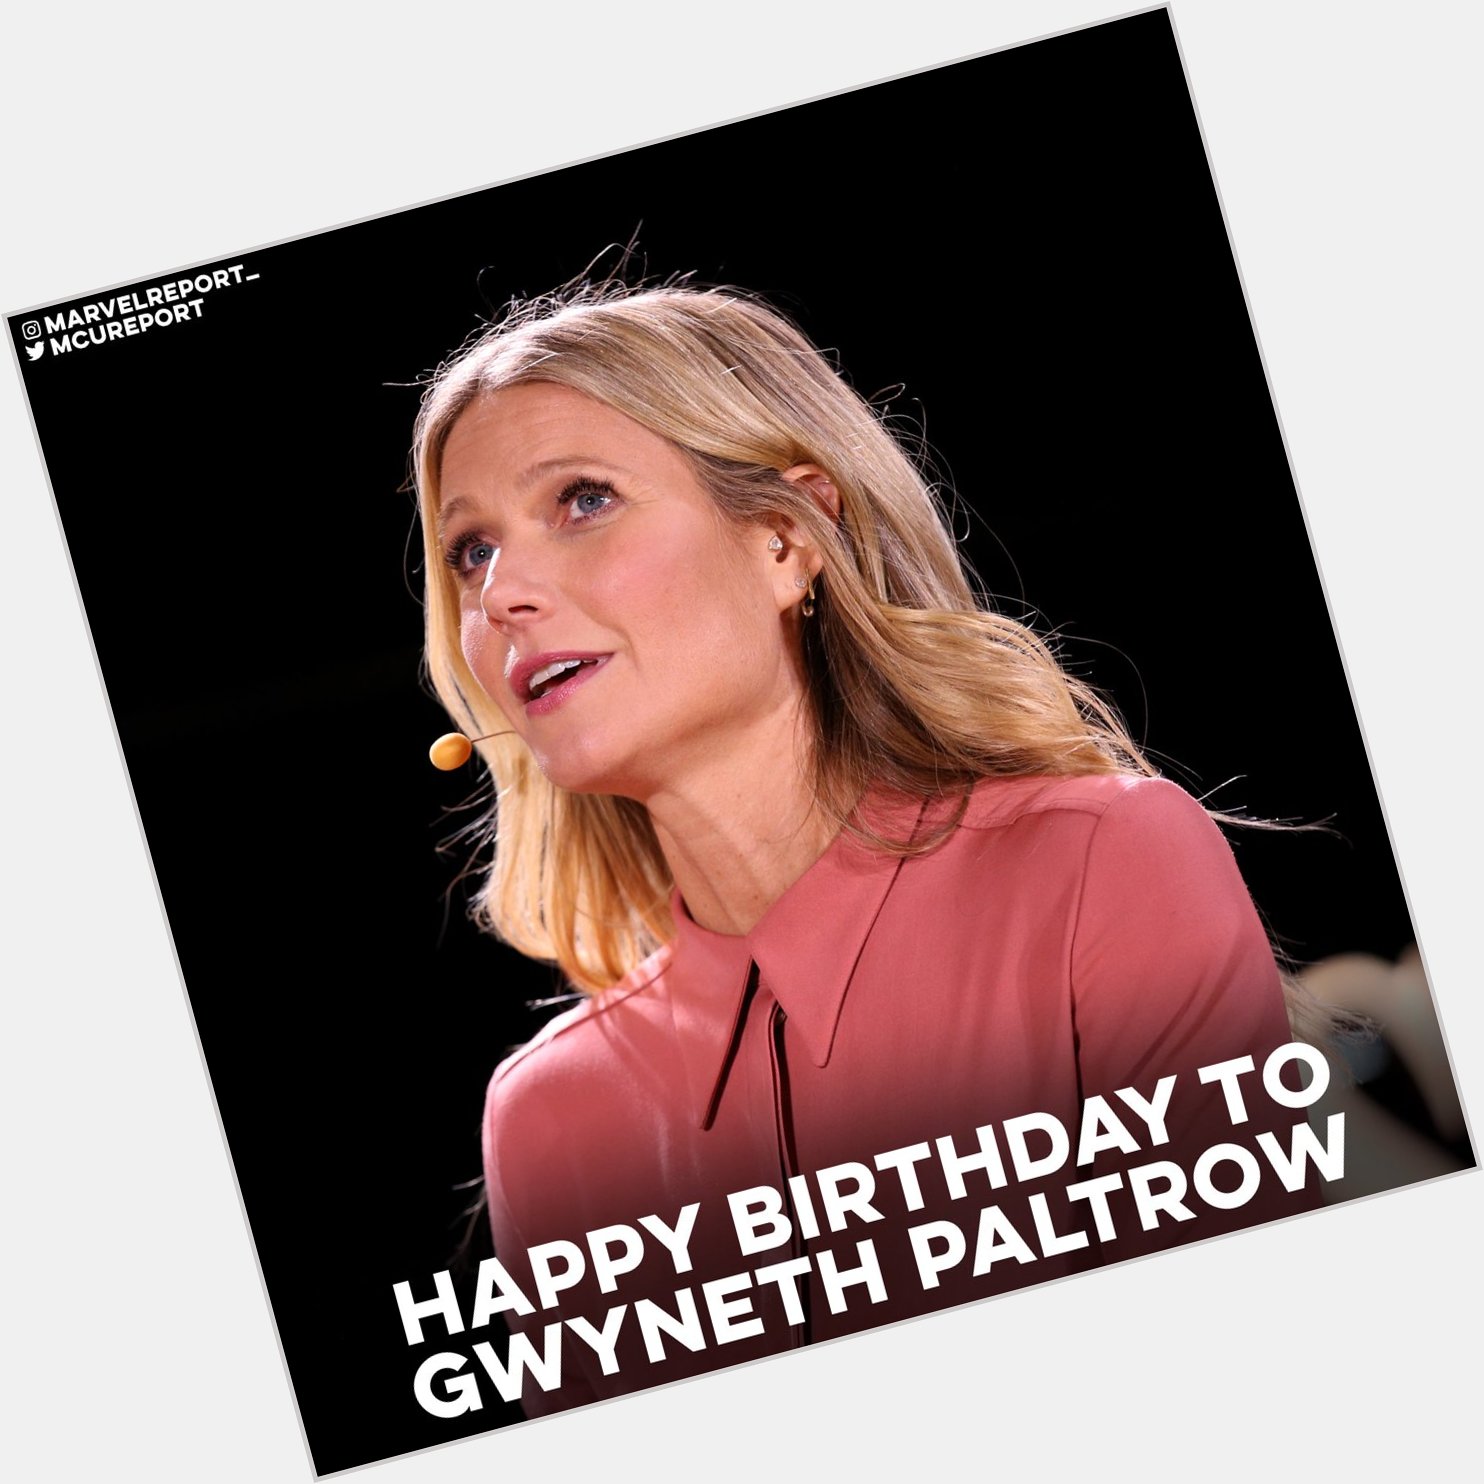 Happy Birthday to Gwyneth Paltrow who turns 49 today 